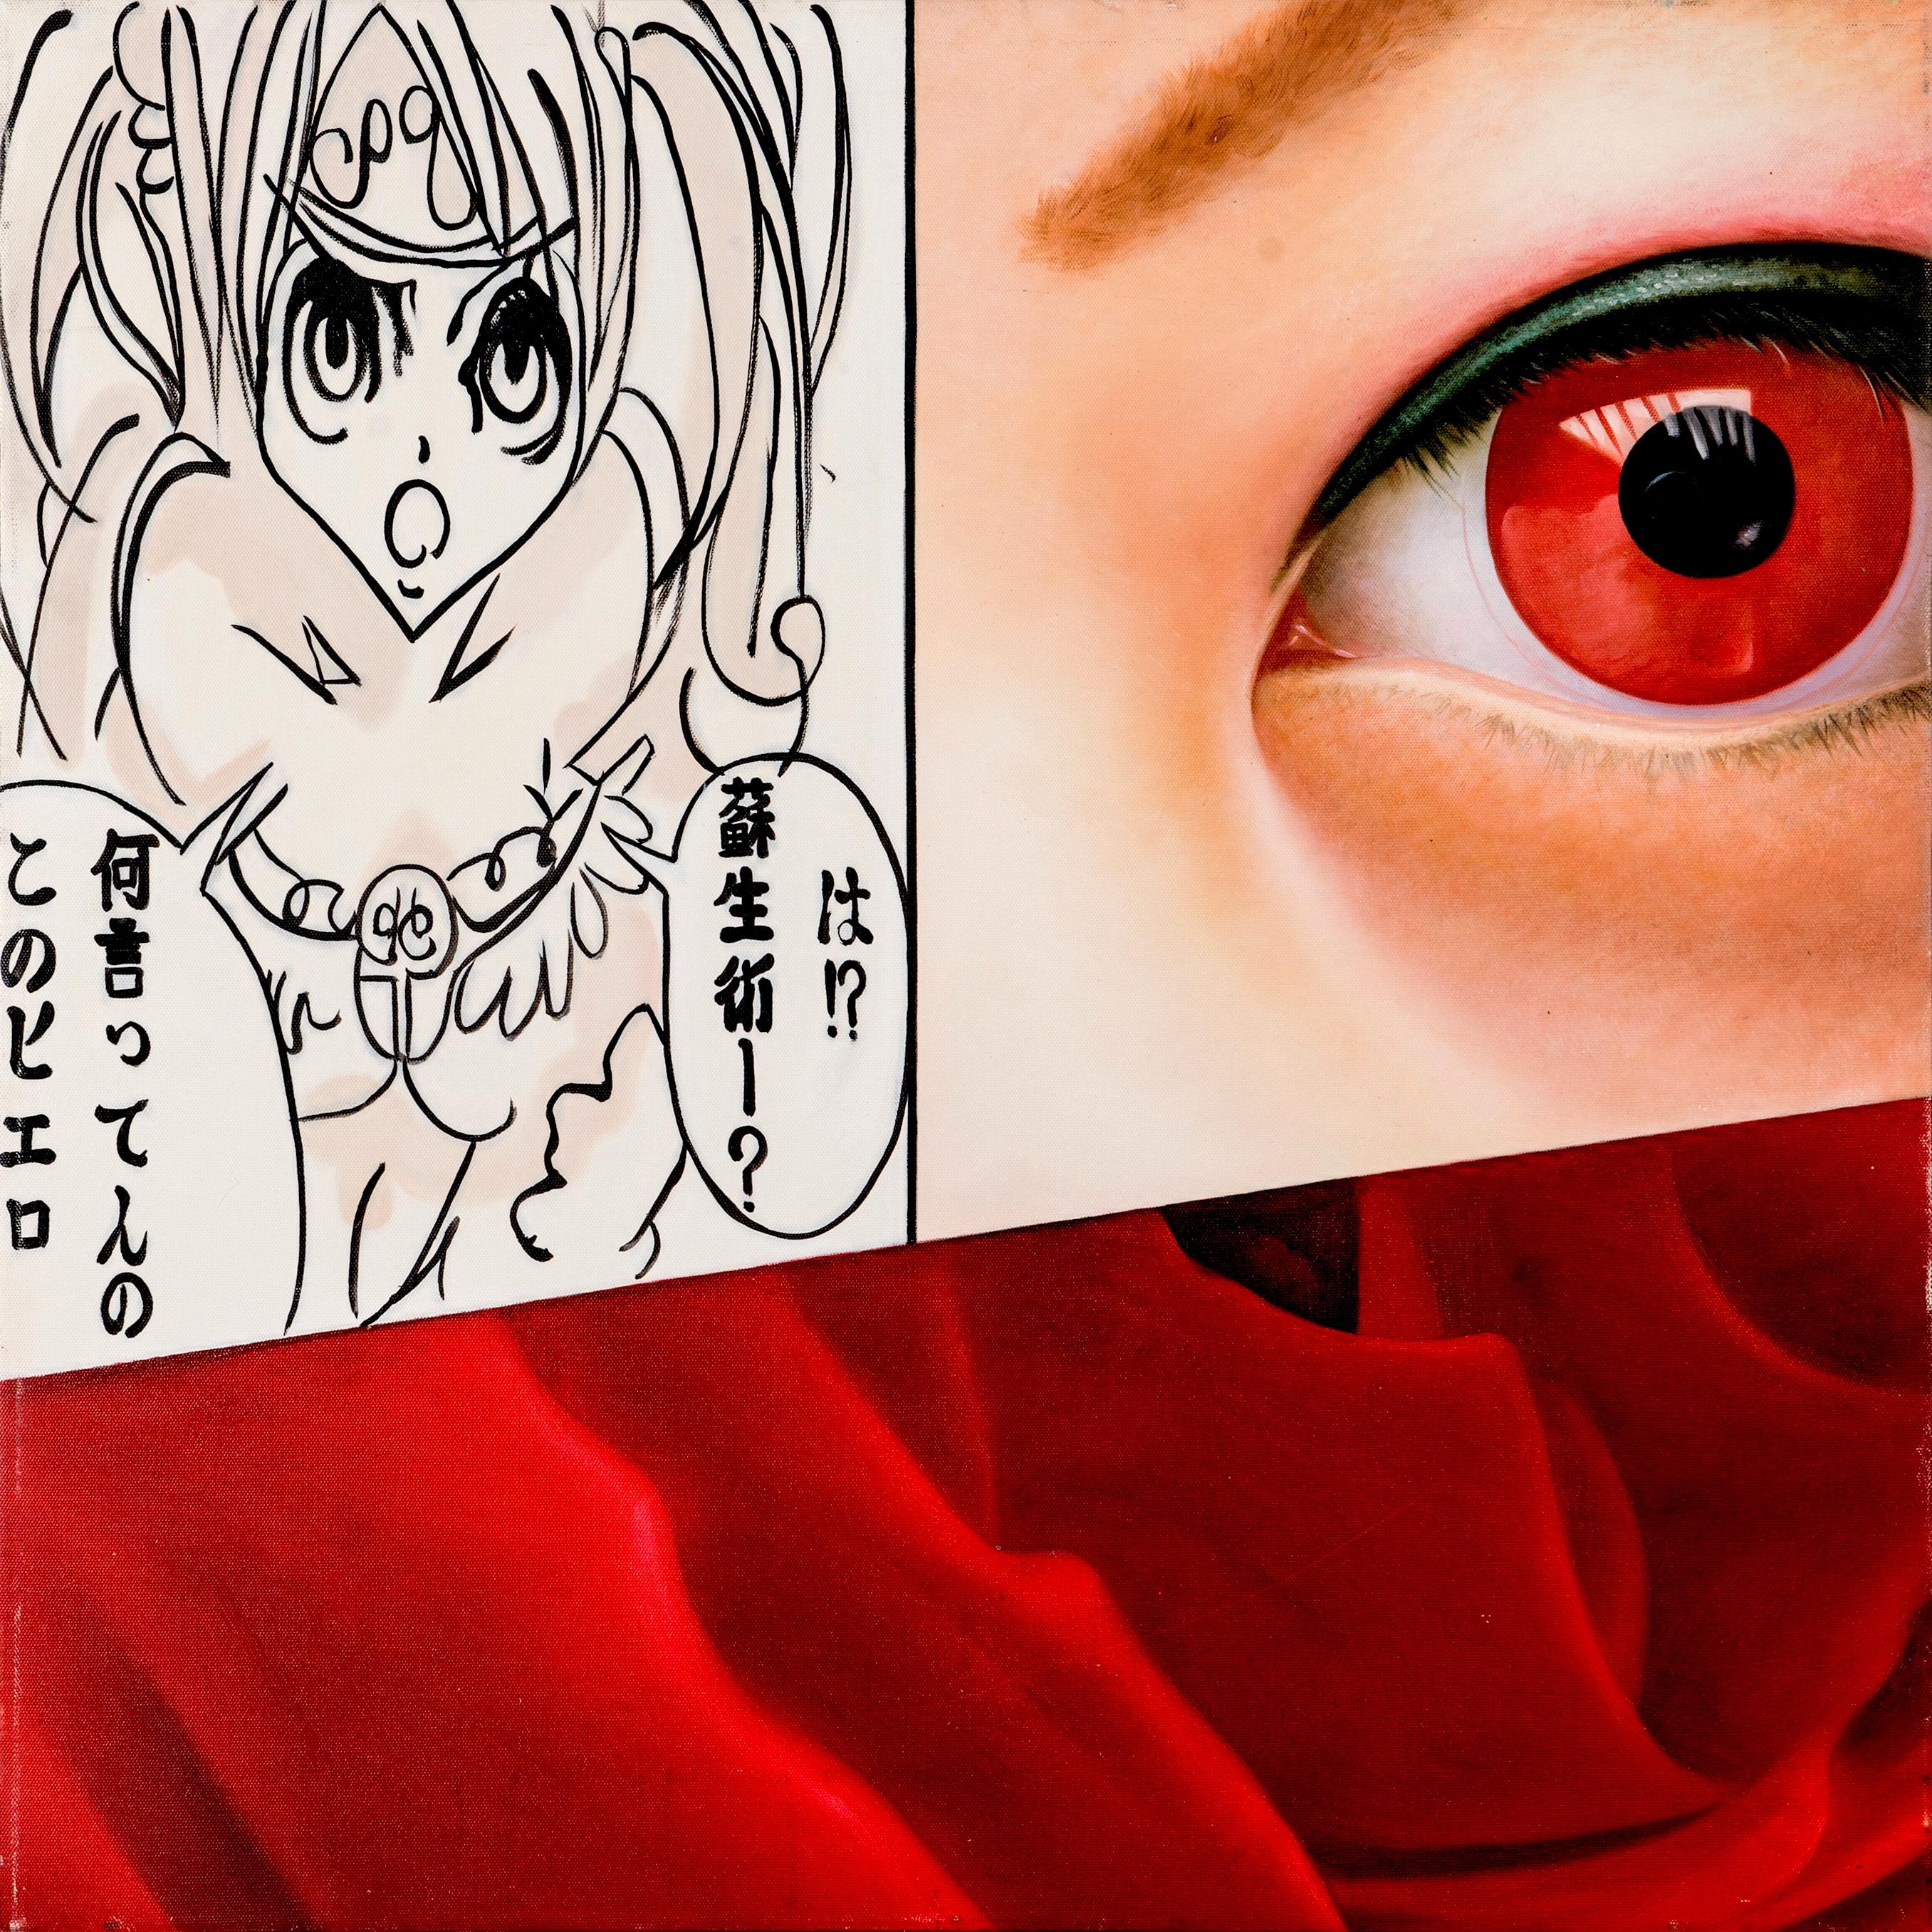 Red Eyes : Crimson Gaze, Portraits of Unveiled Emotion - Painting by JIMMY YOSHIMURA